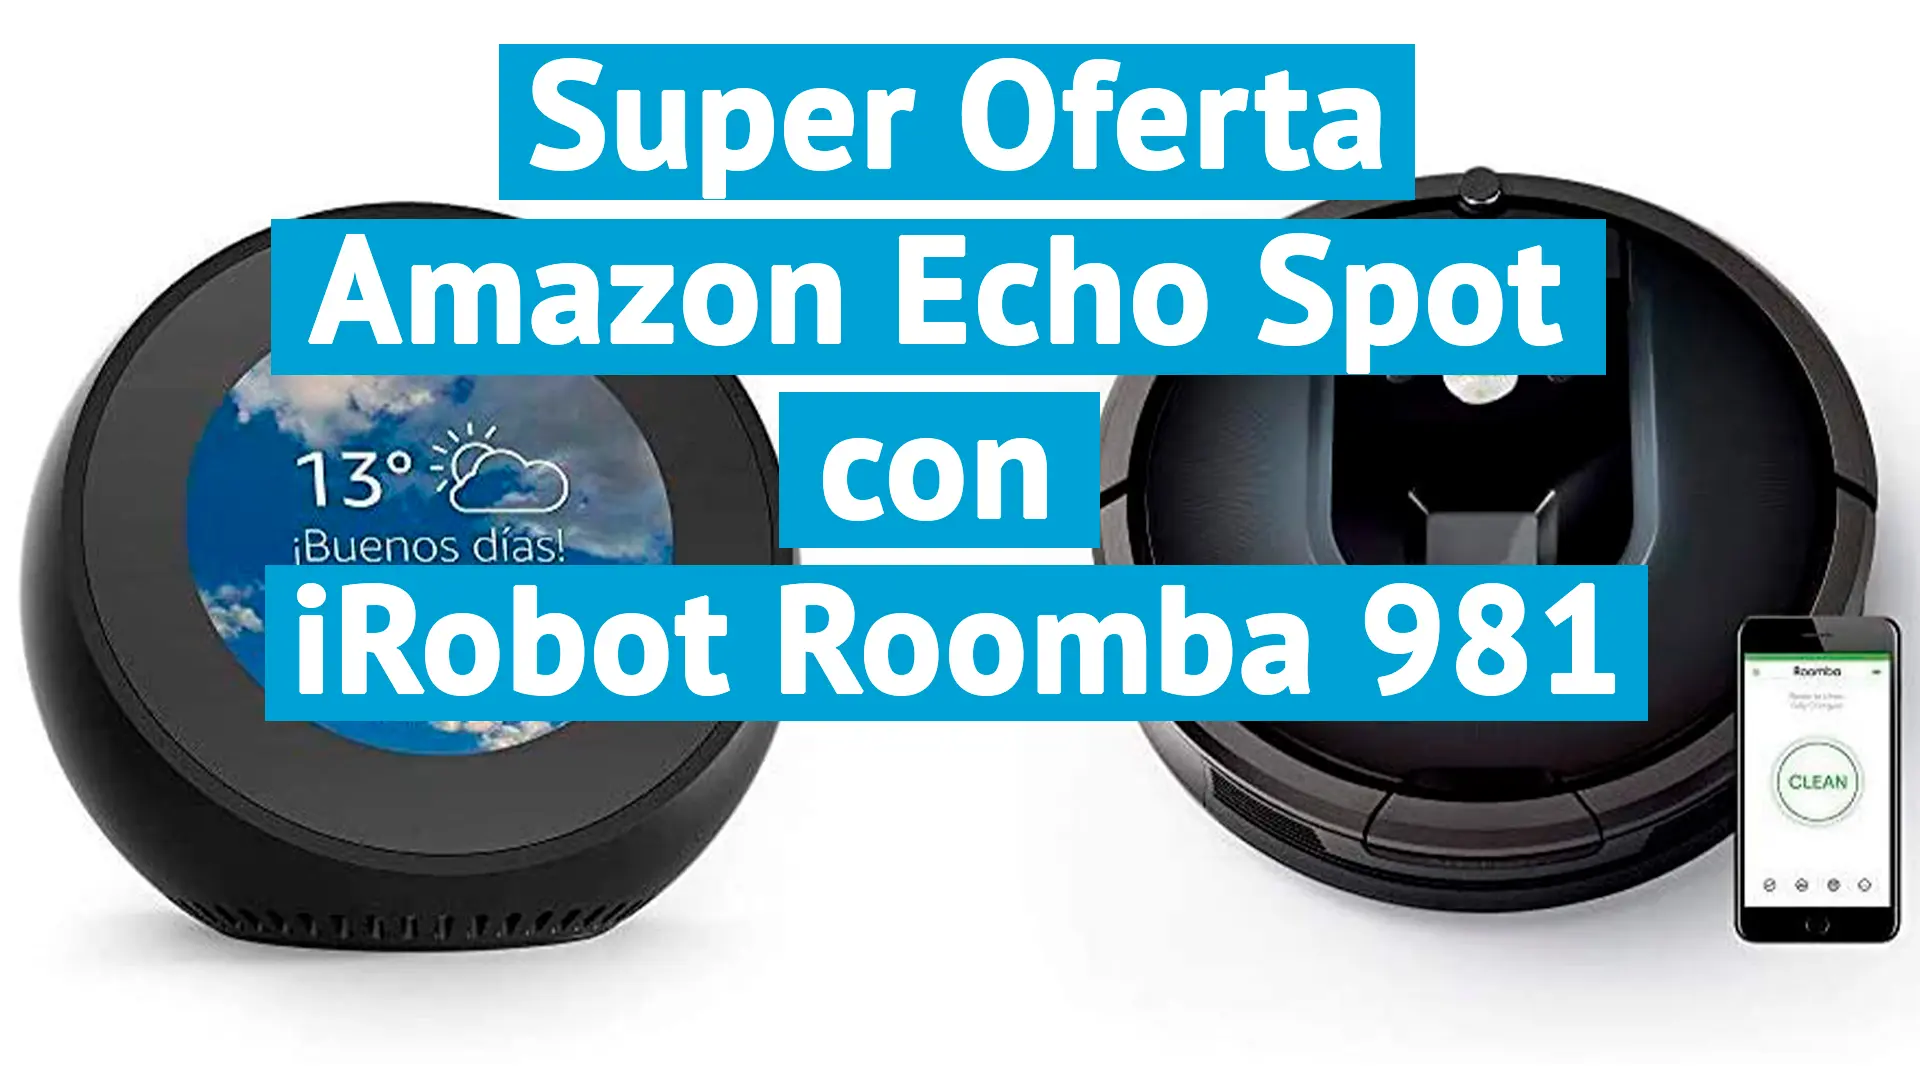 Oferta Amazon Echo Spot con iRobot Roomba 981